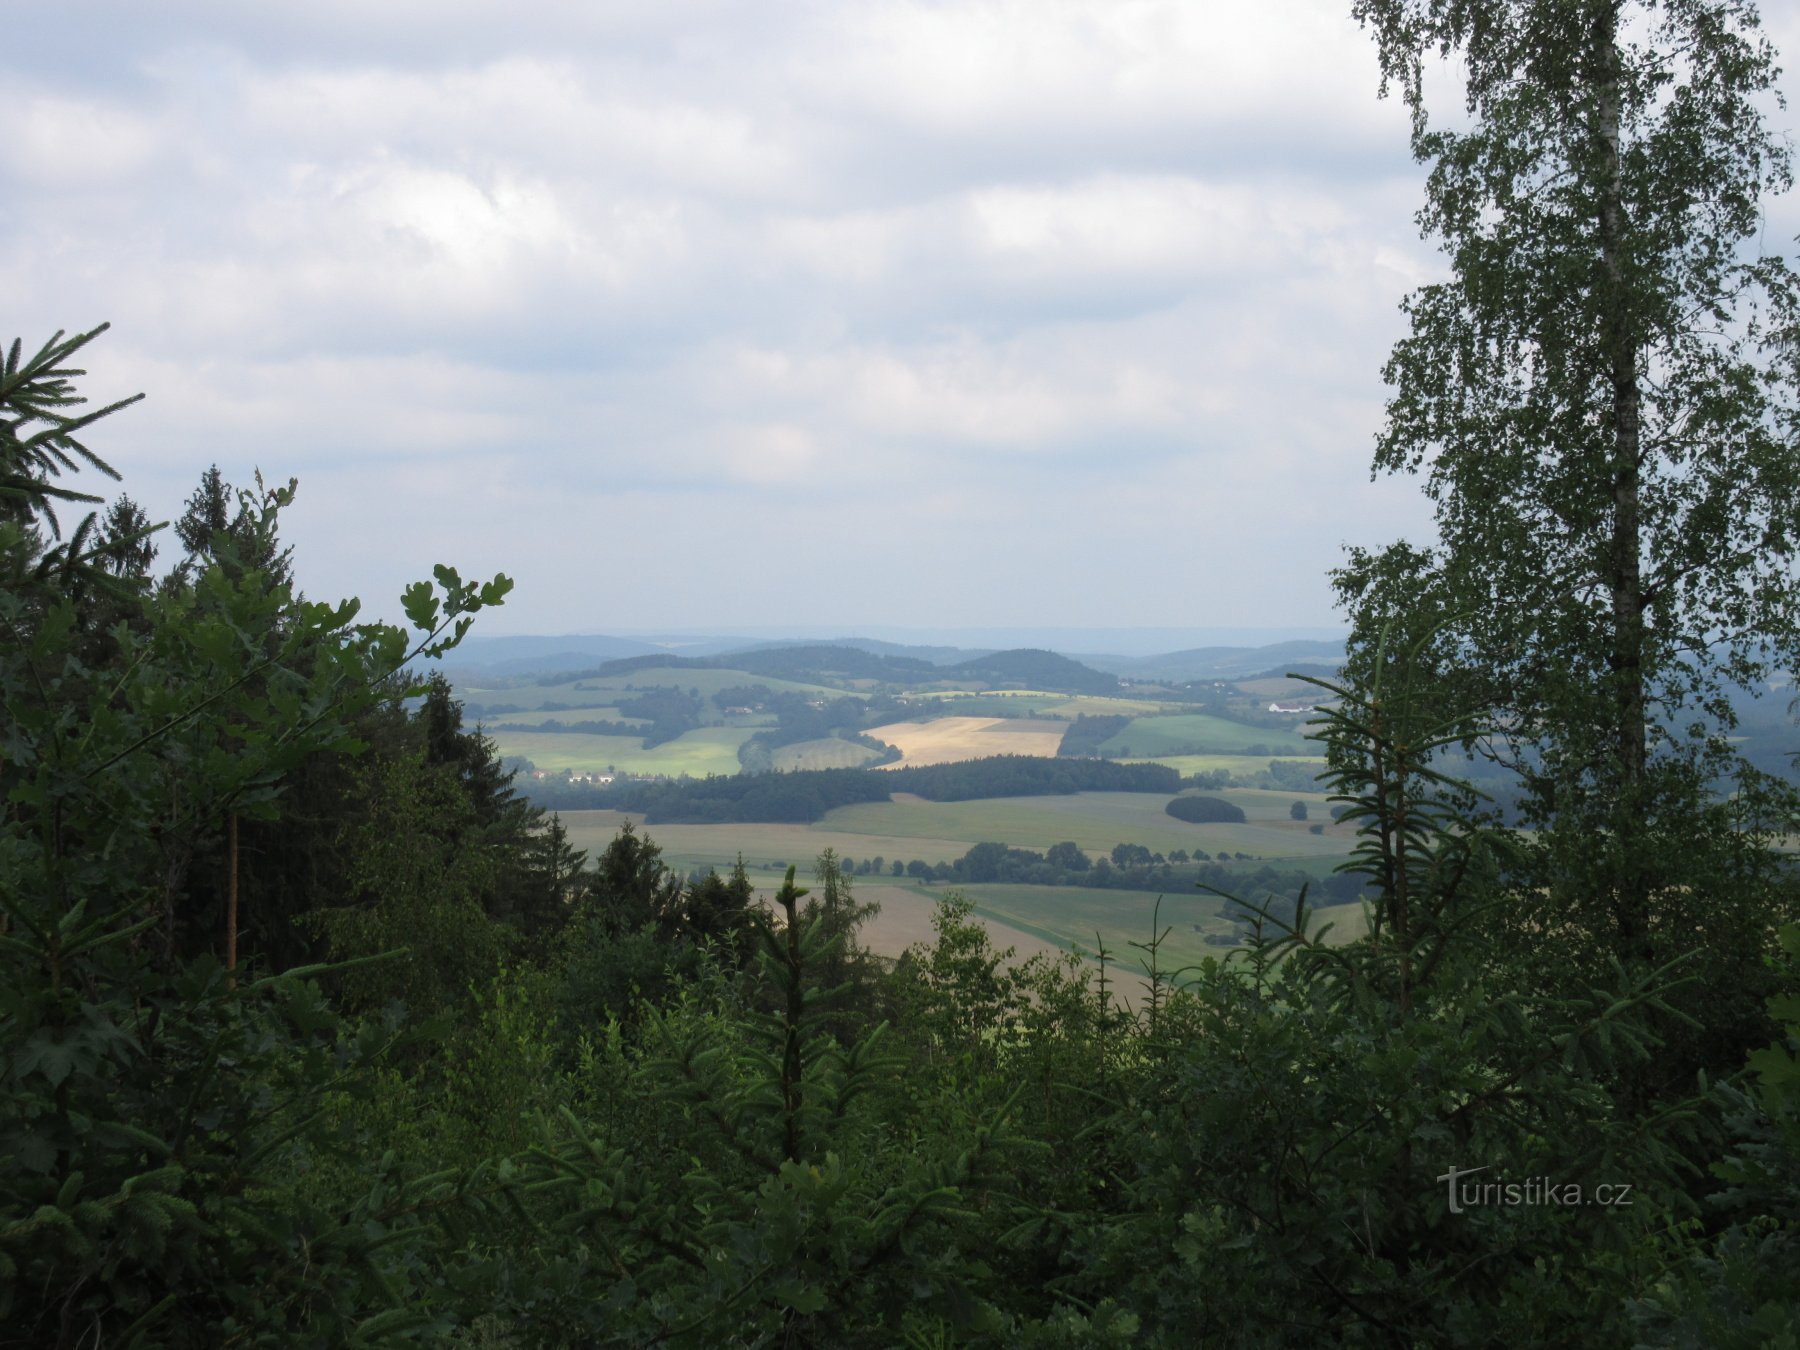 La vista dalla torre di osservazione di Drahousek